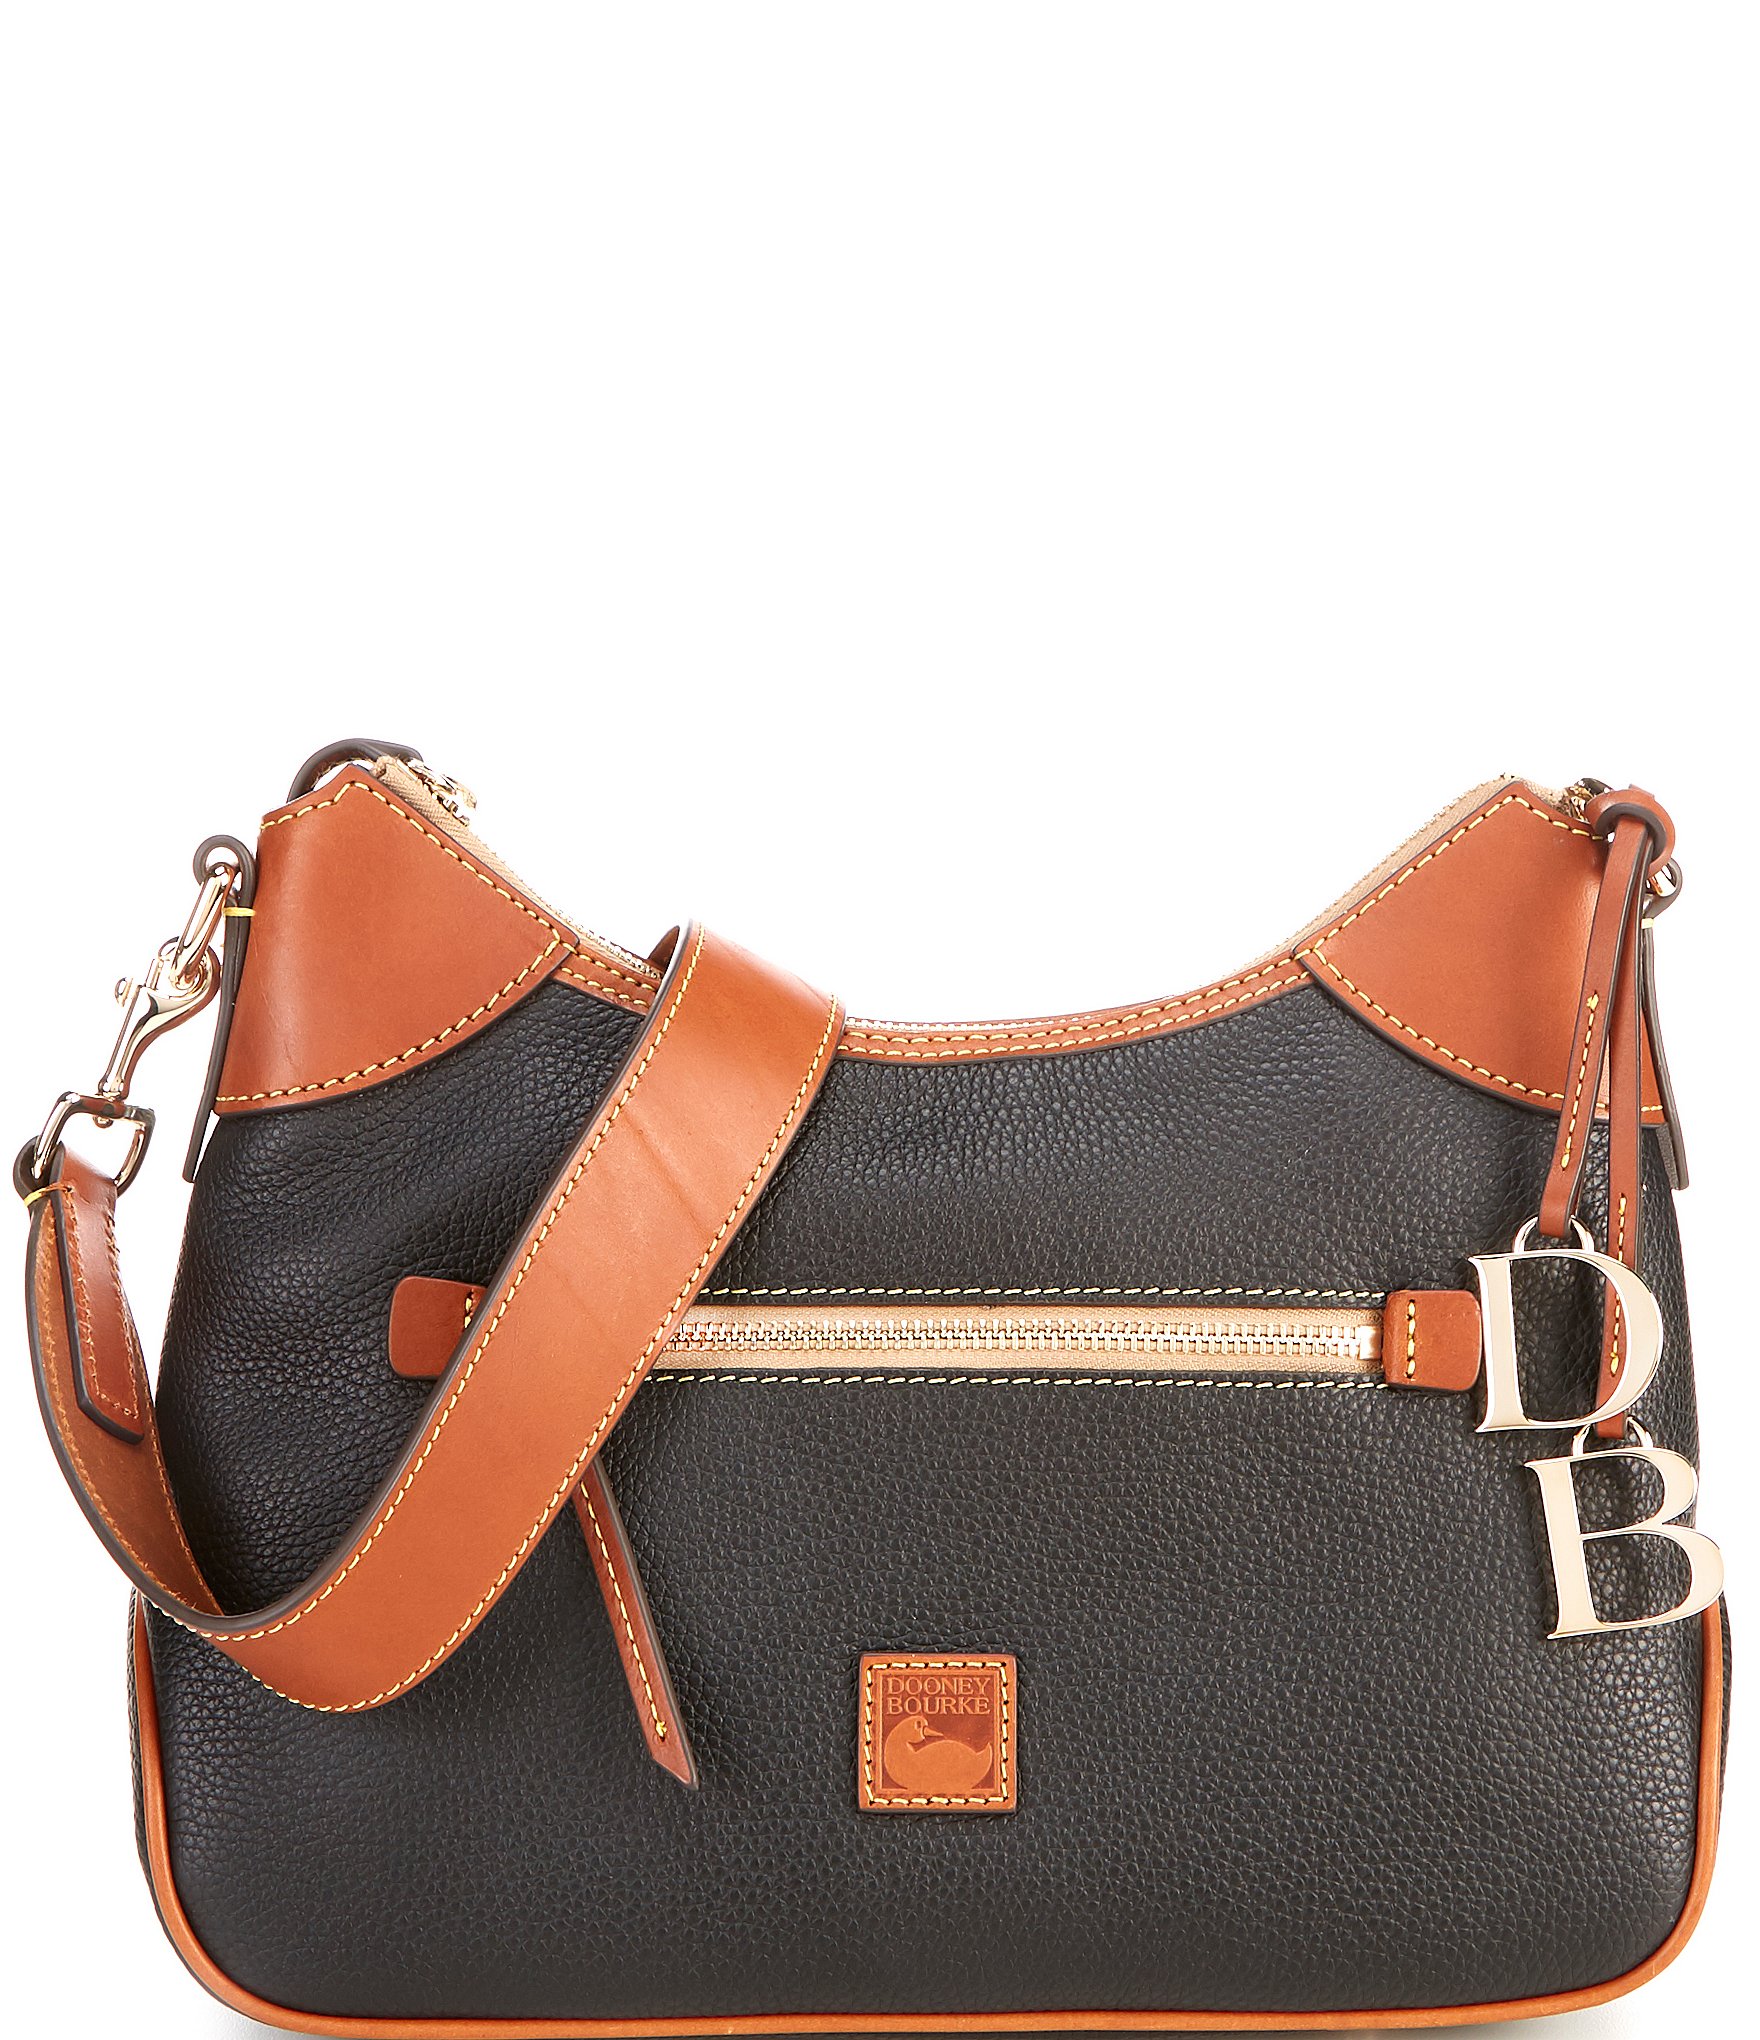  Dooney & Bourke Handbag, Pebble Grain Small Hobo Shoulder Bag -  Blush : Dooney & Bourke: Clothing, Shoes & Jewelry